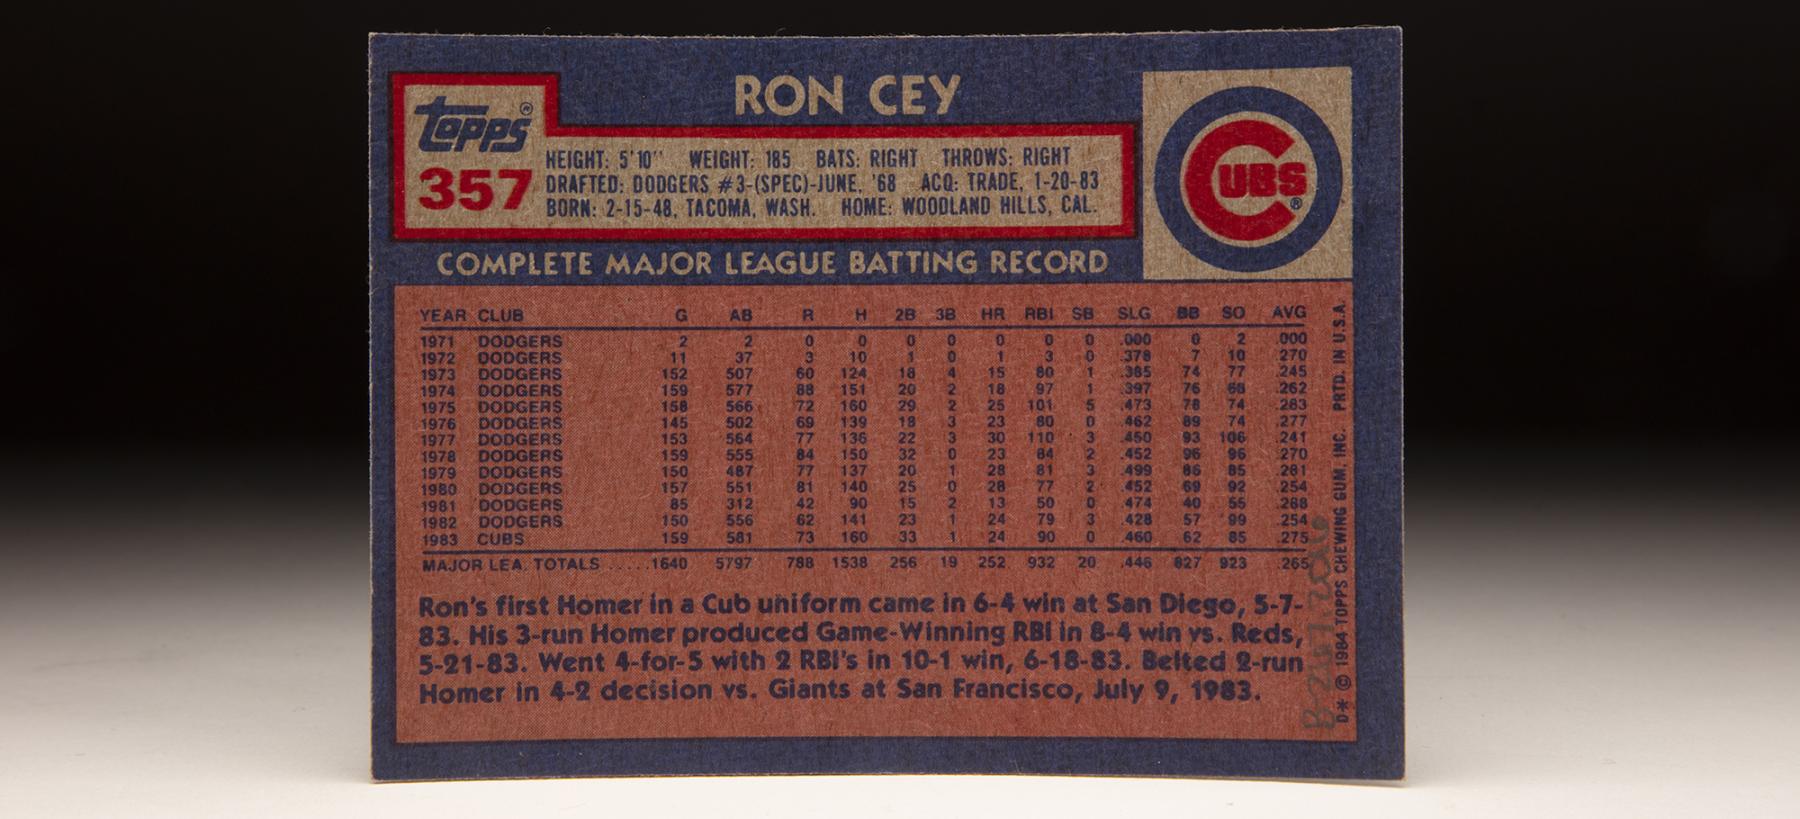 CardCorner: 1984 Topps Ron Cey